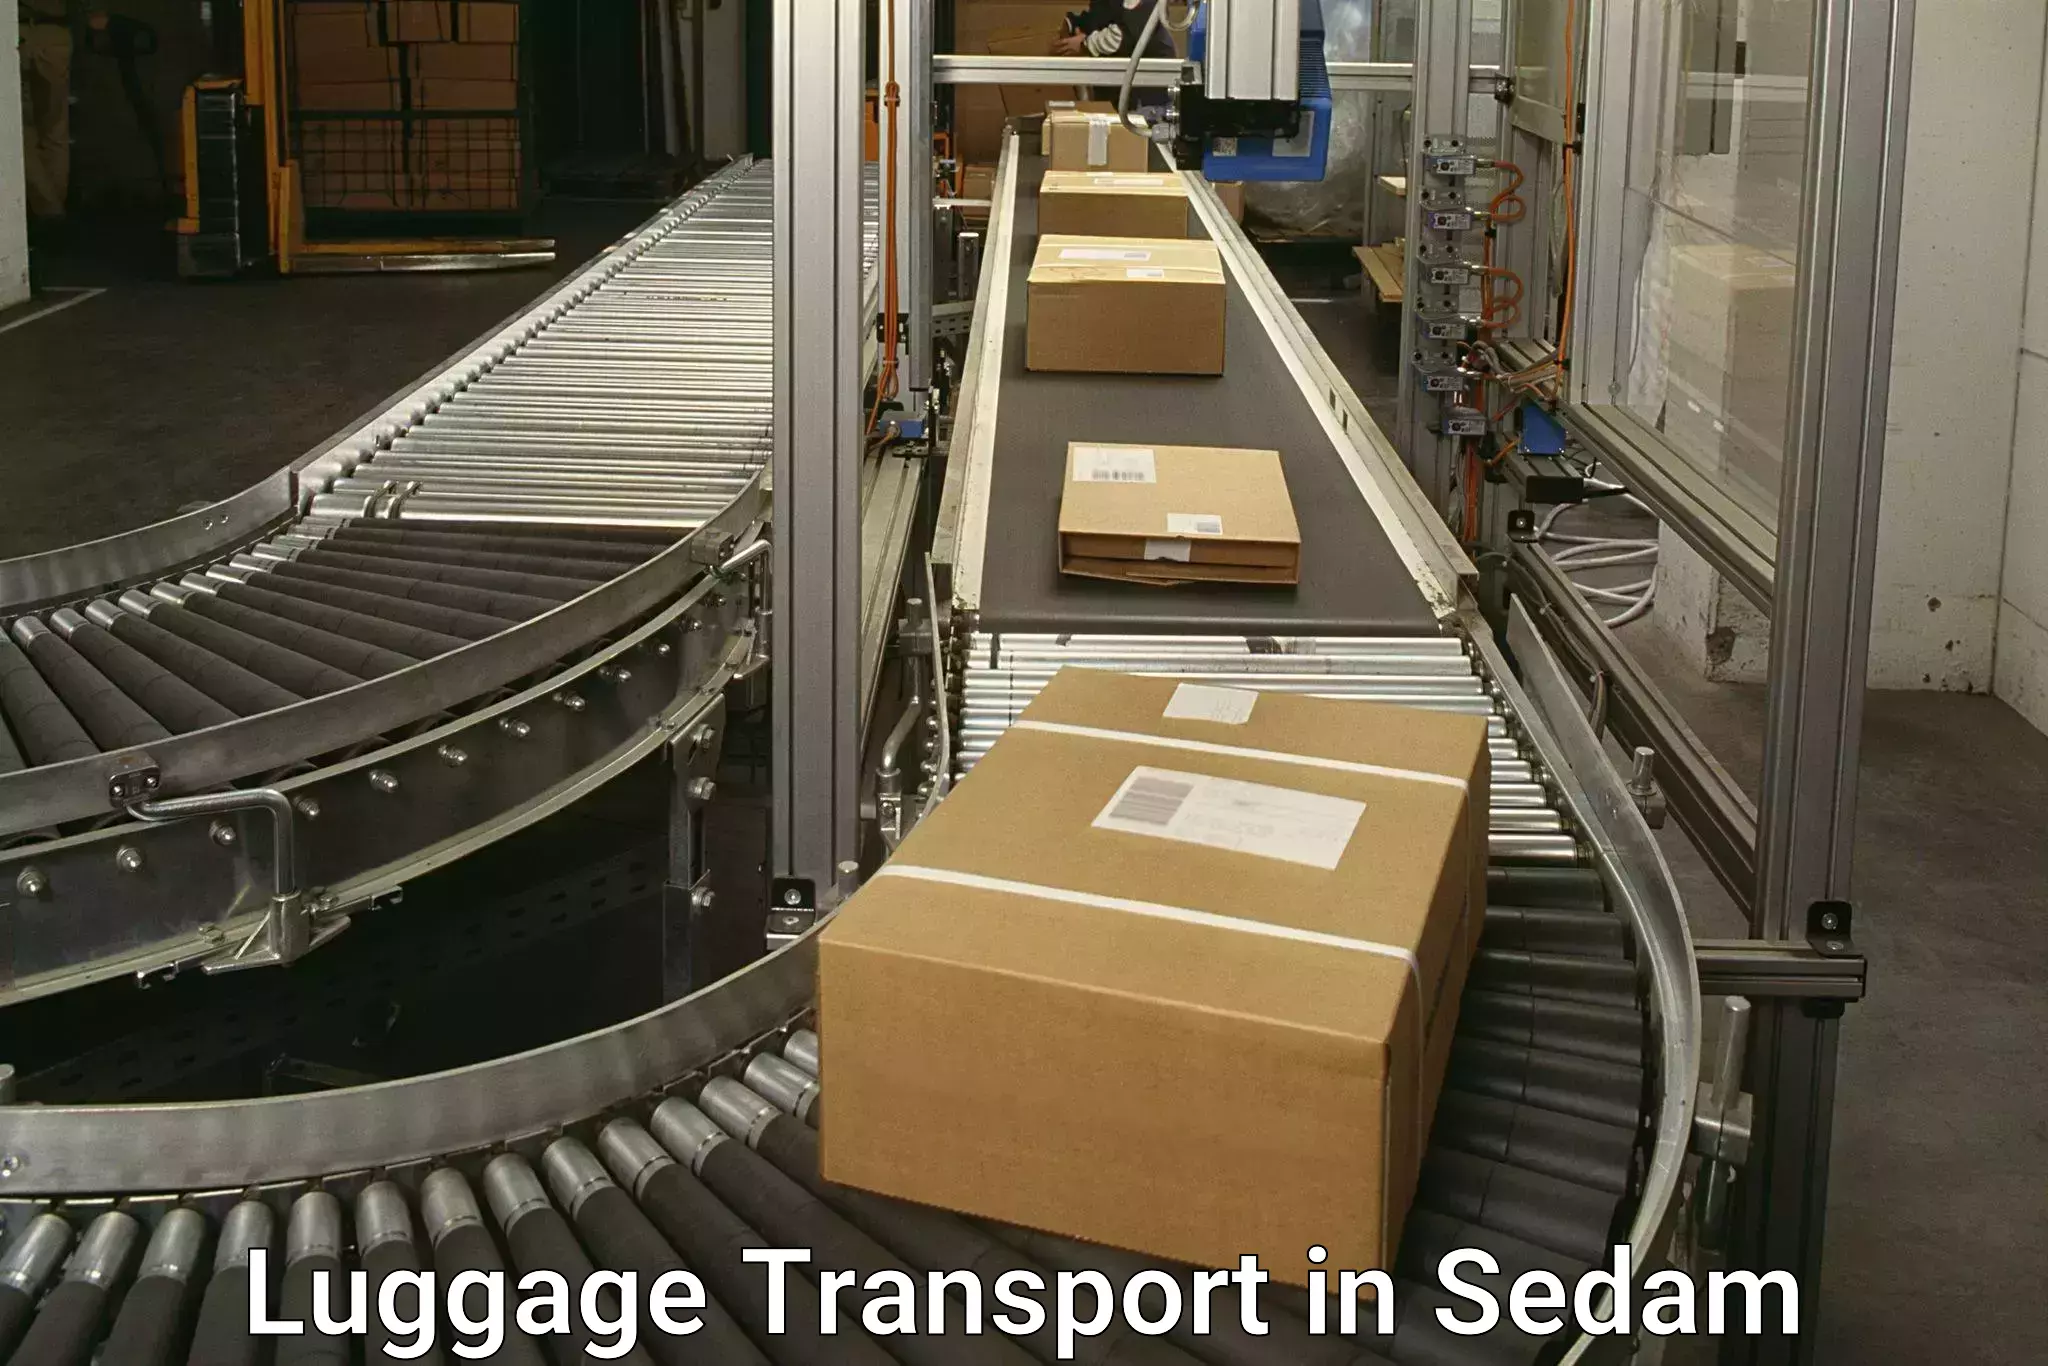 Luggage shipment processing in Sedam